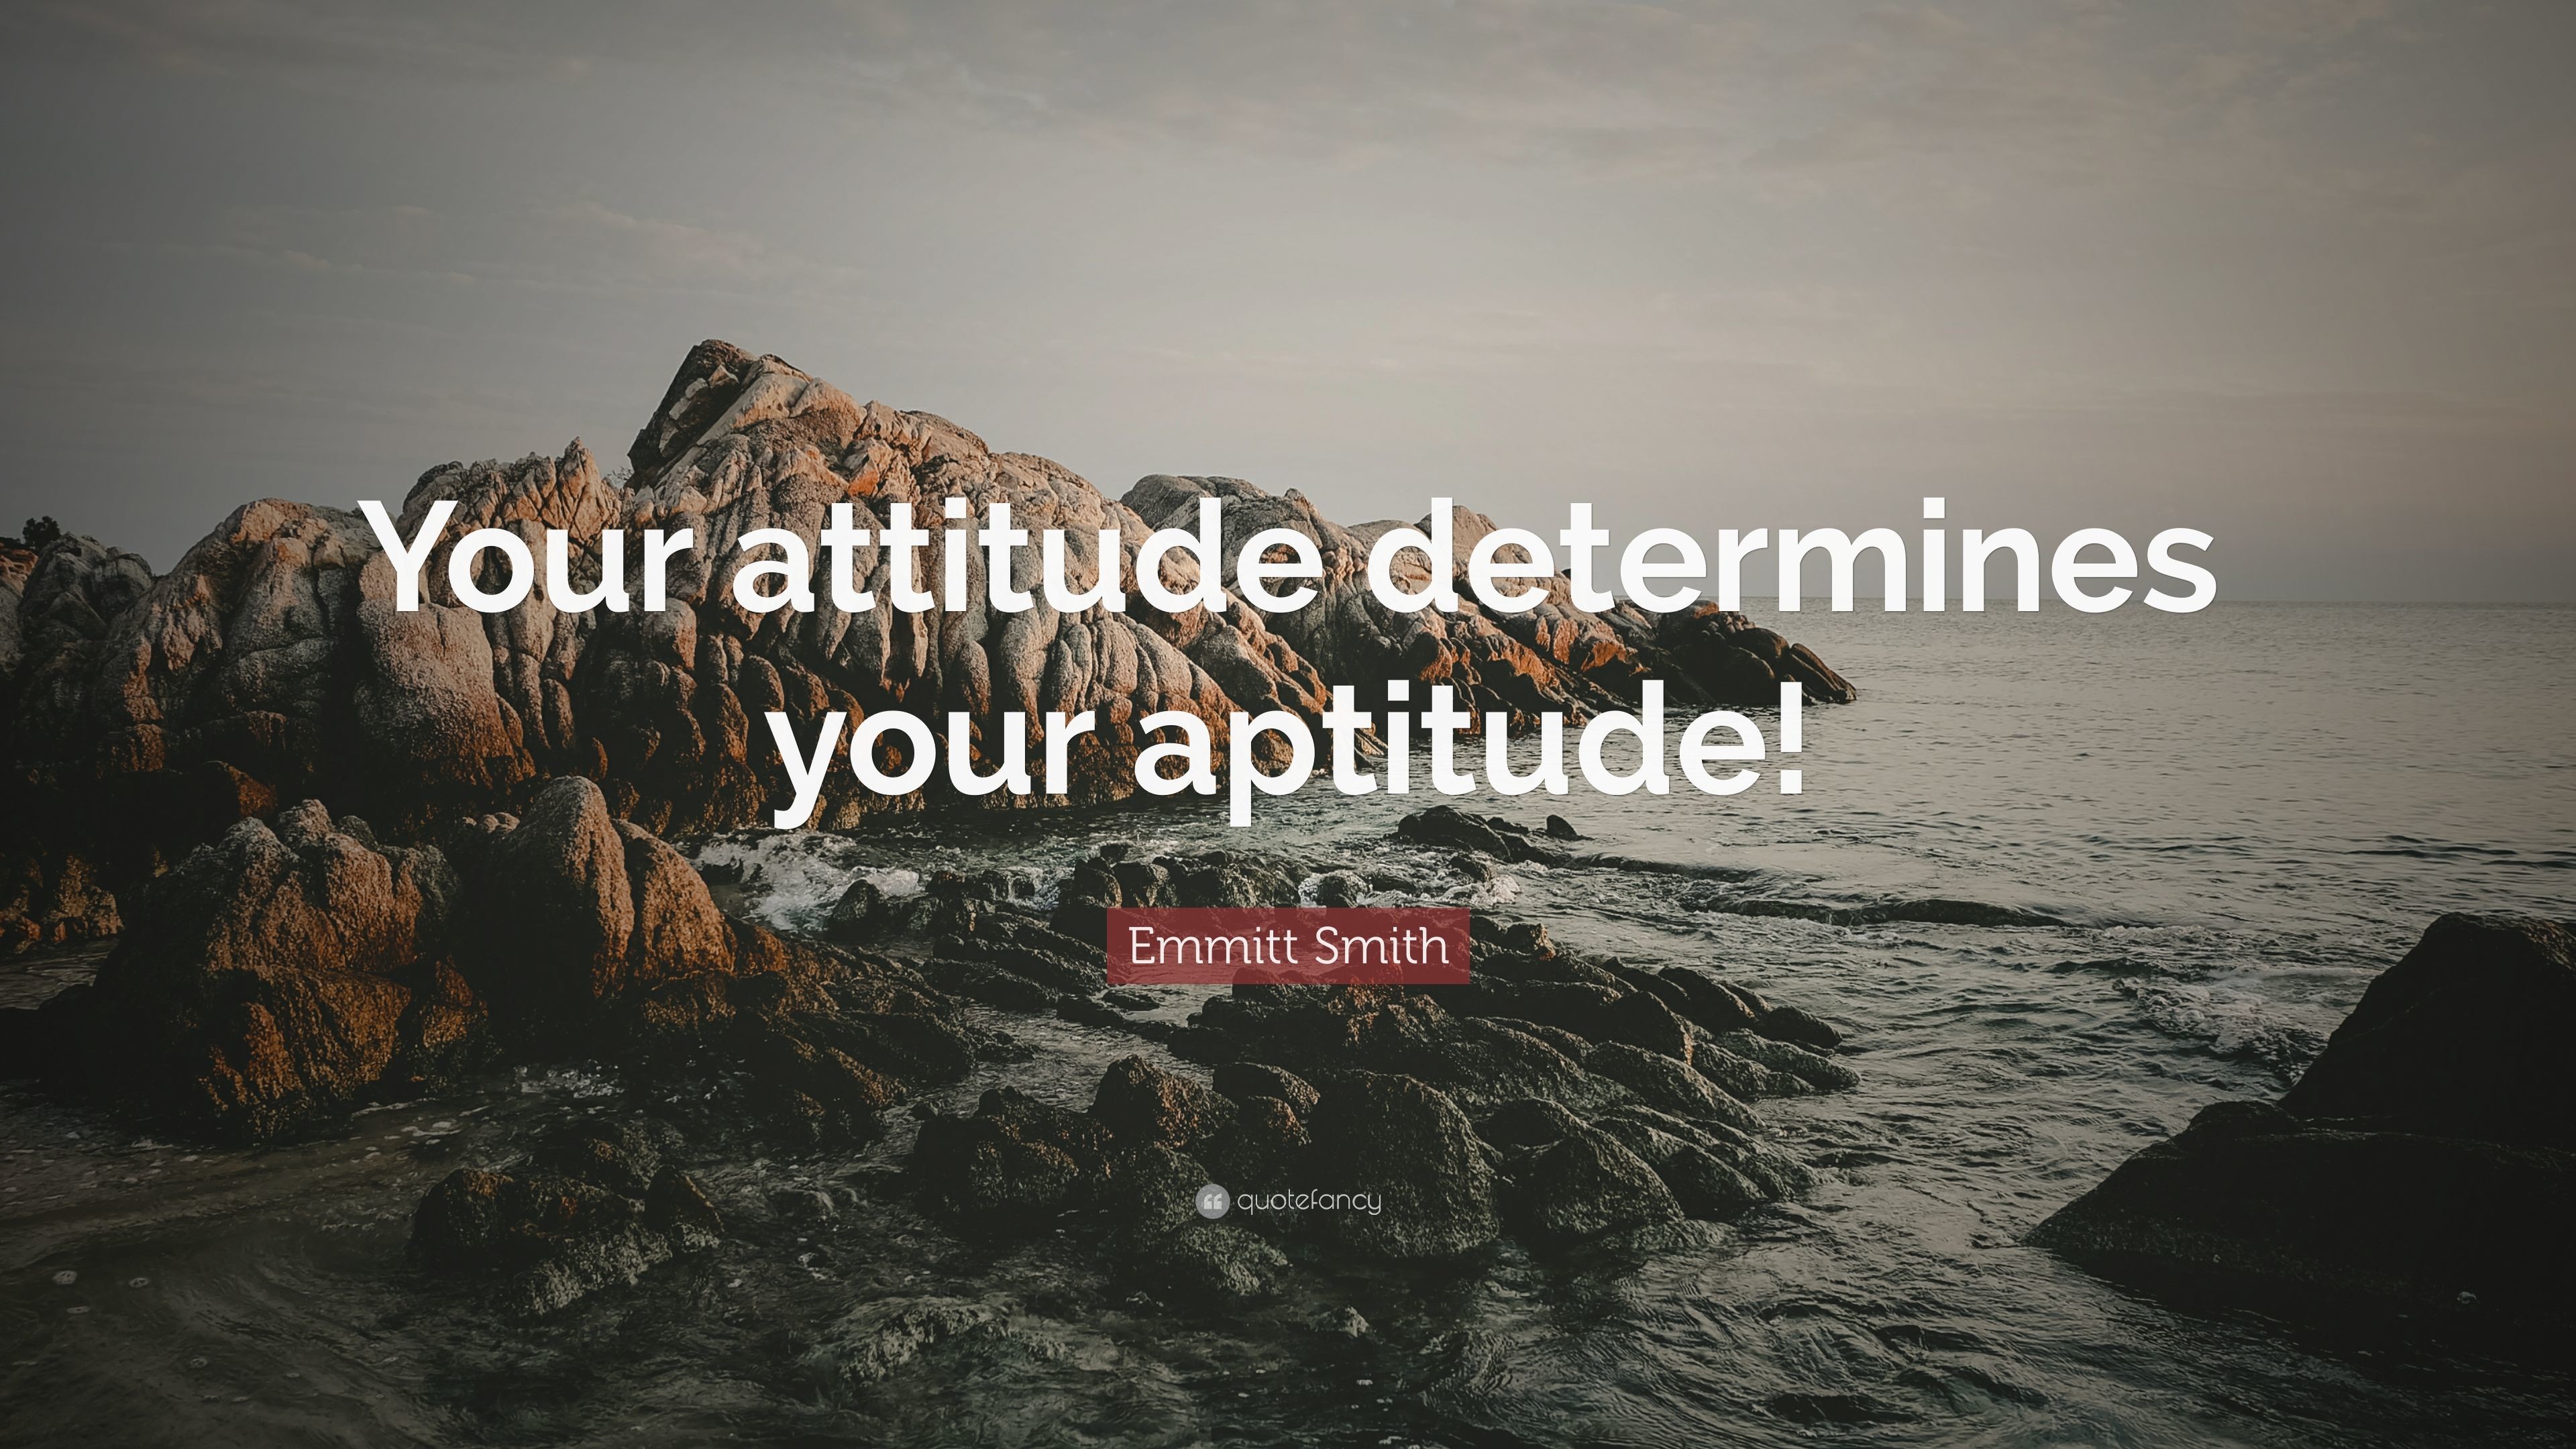 3840x2160 Emmitt Smith Quote: “Your attitude determines your aptitude!”